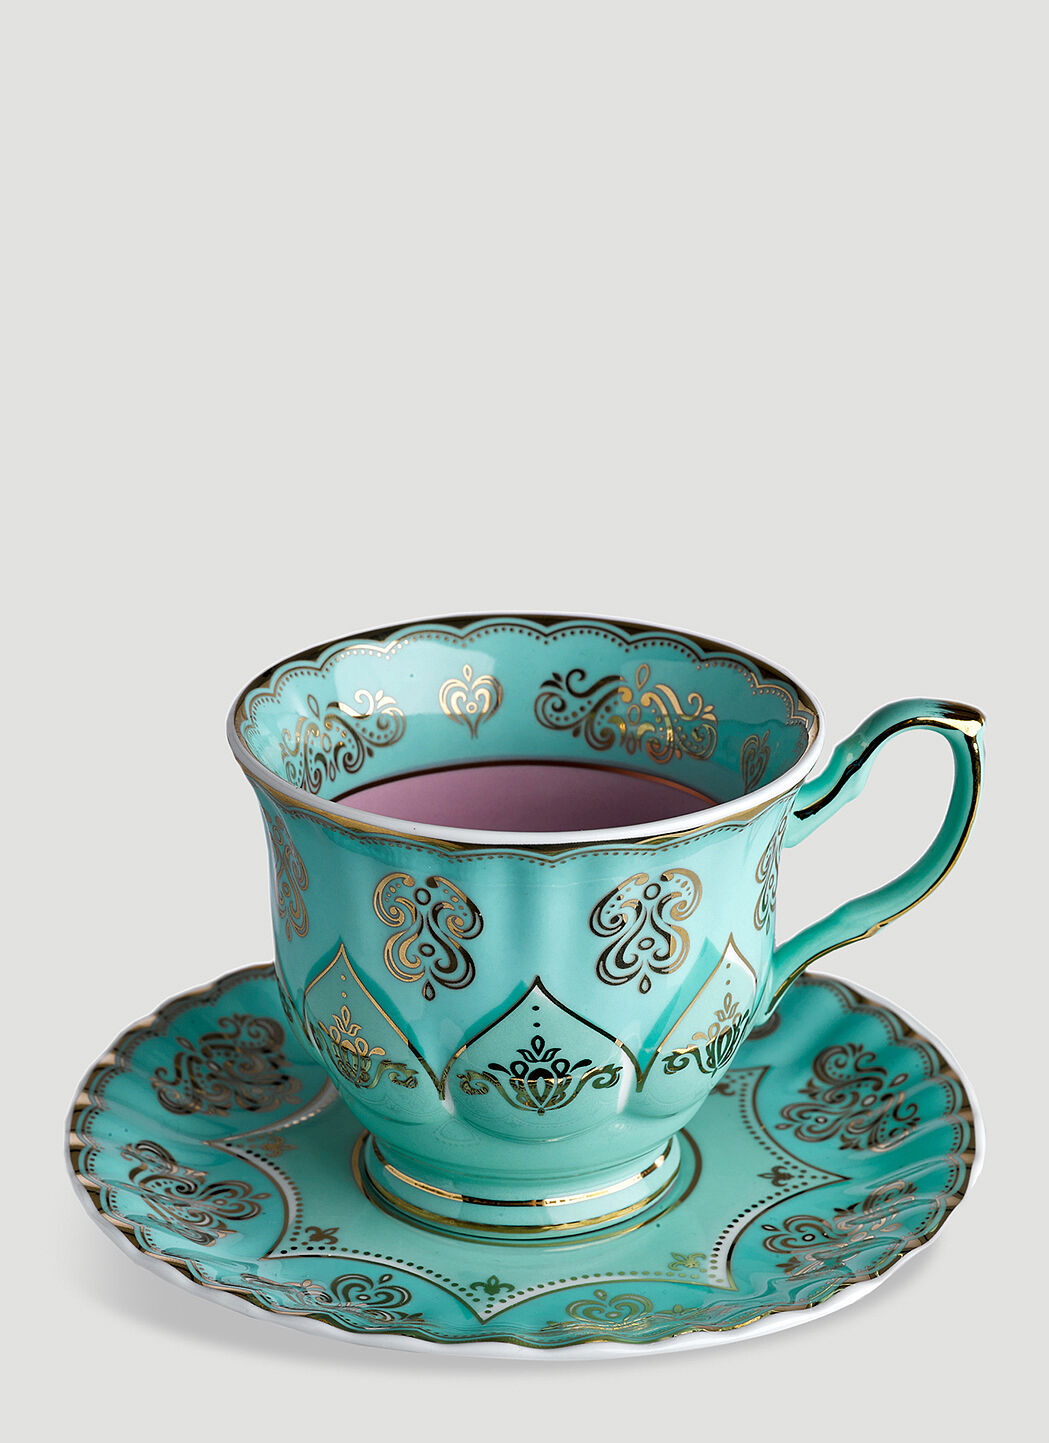 Polspotten Set of Four Grandpa Tea Multicolour wps0691150